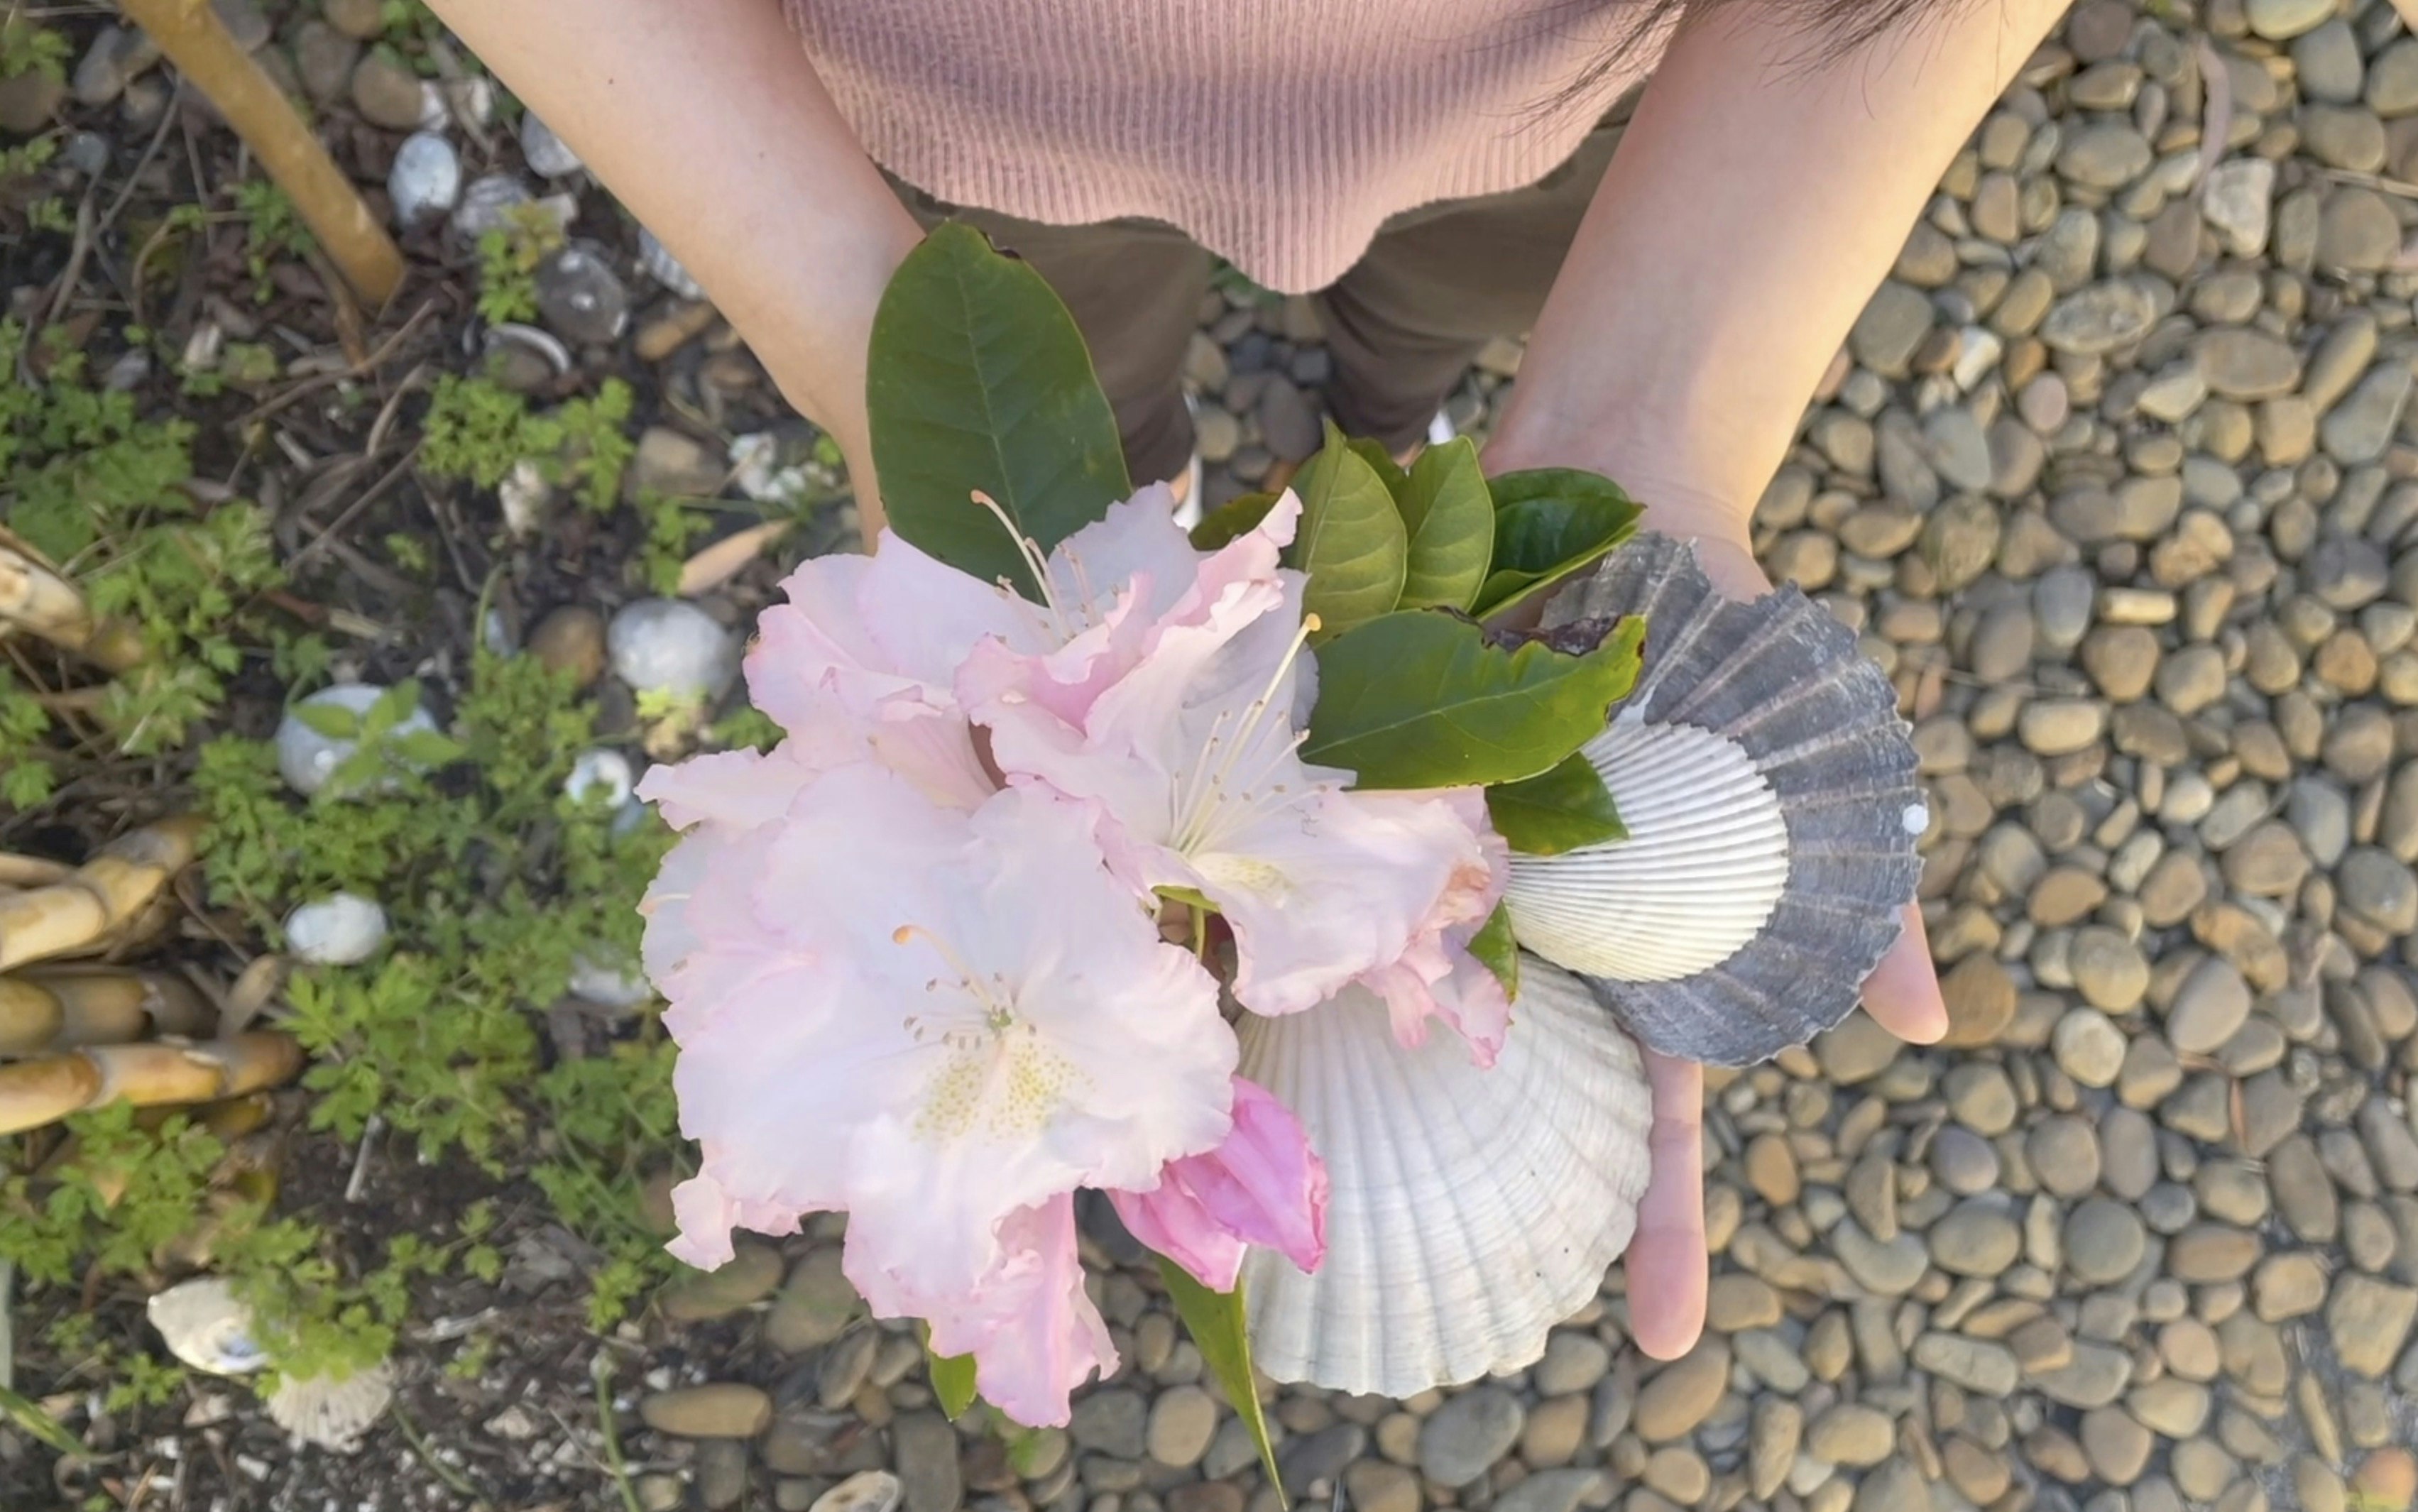 Clay flowers with Ruth Ju-Shih Li